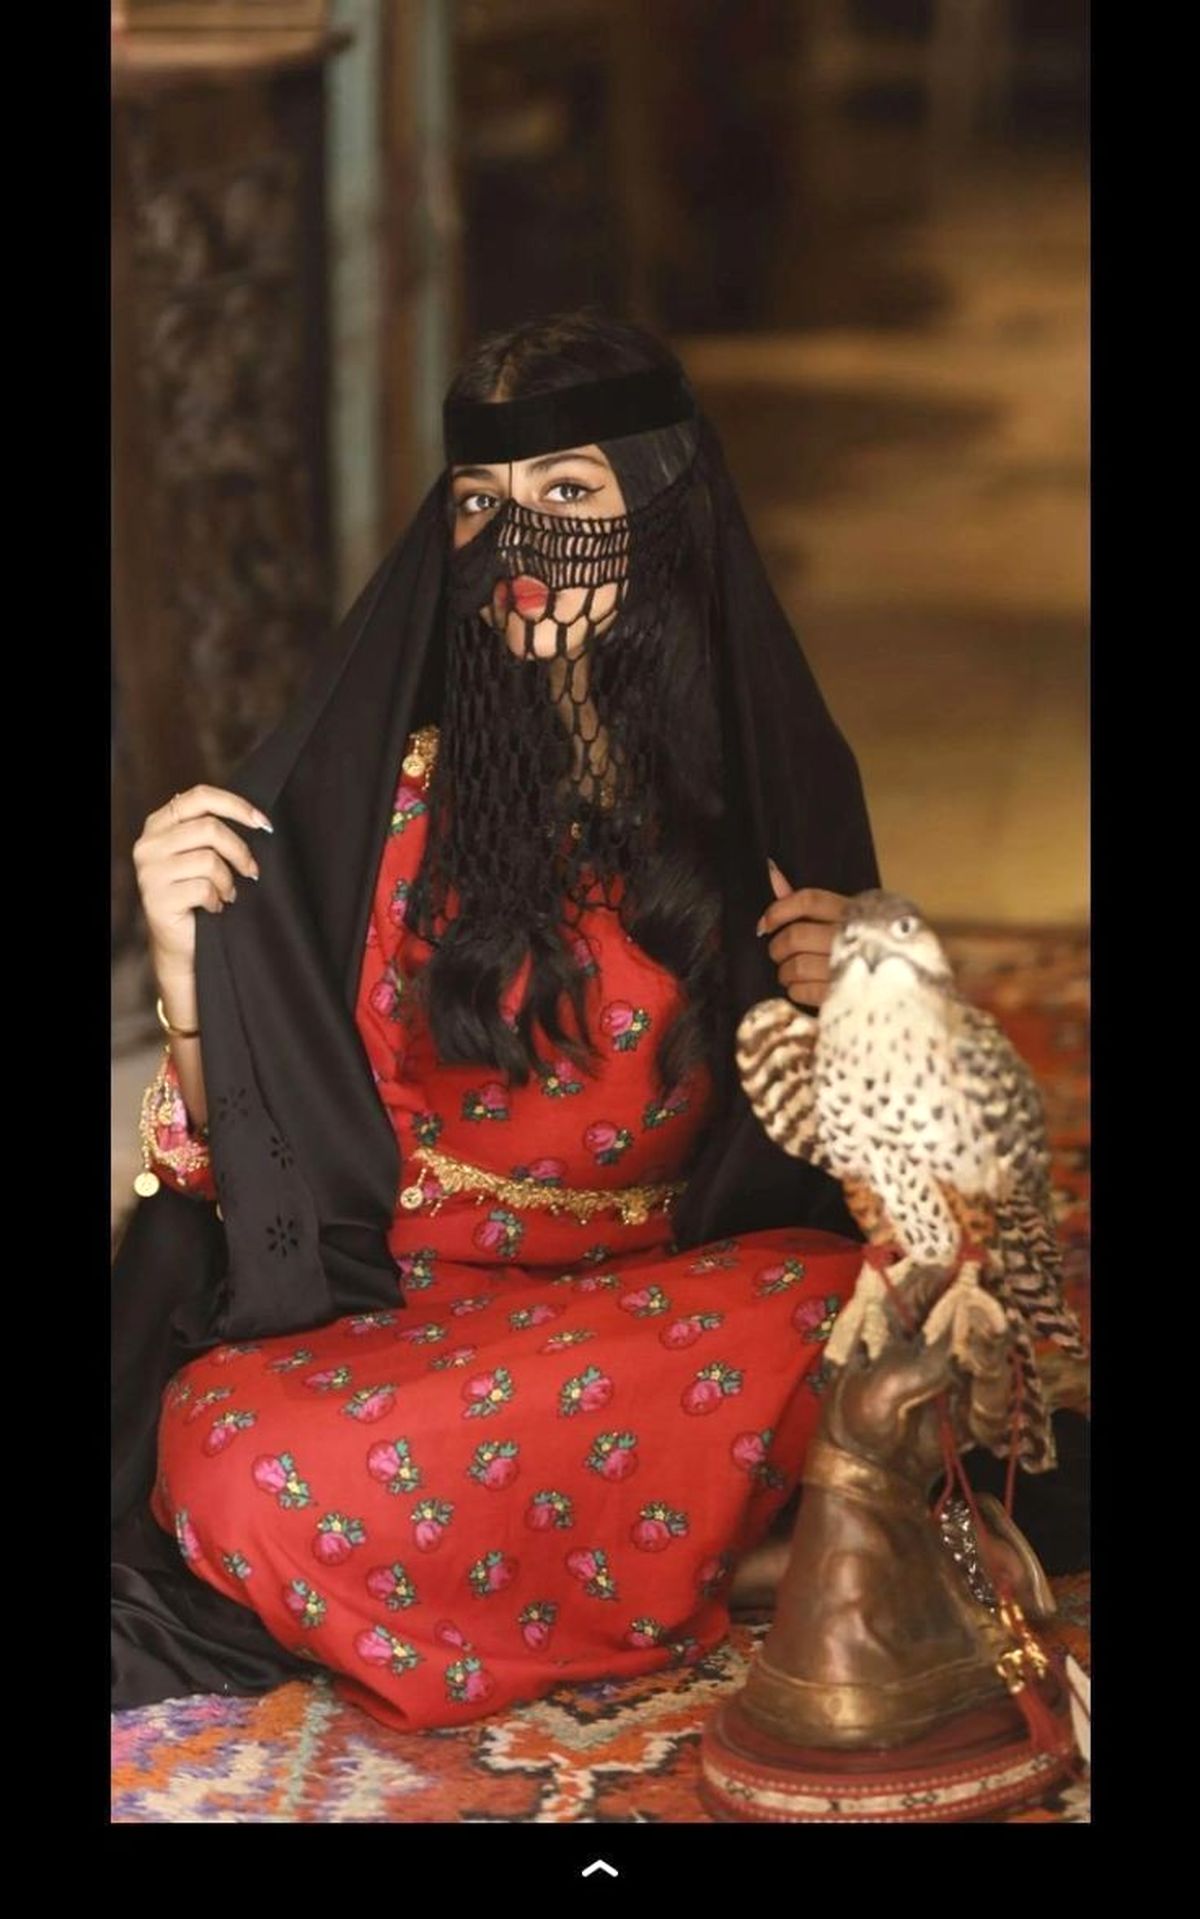 زنان عرب